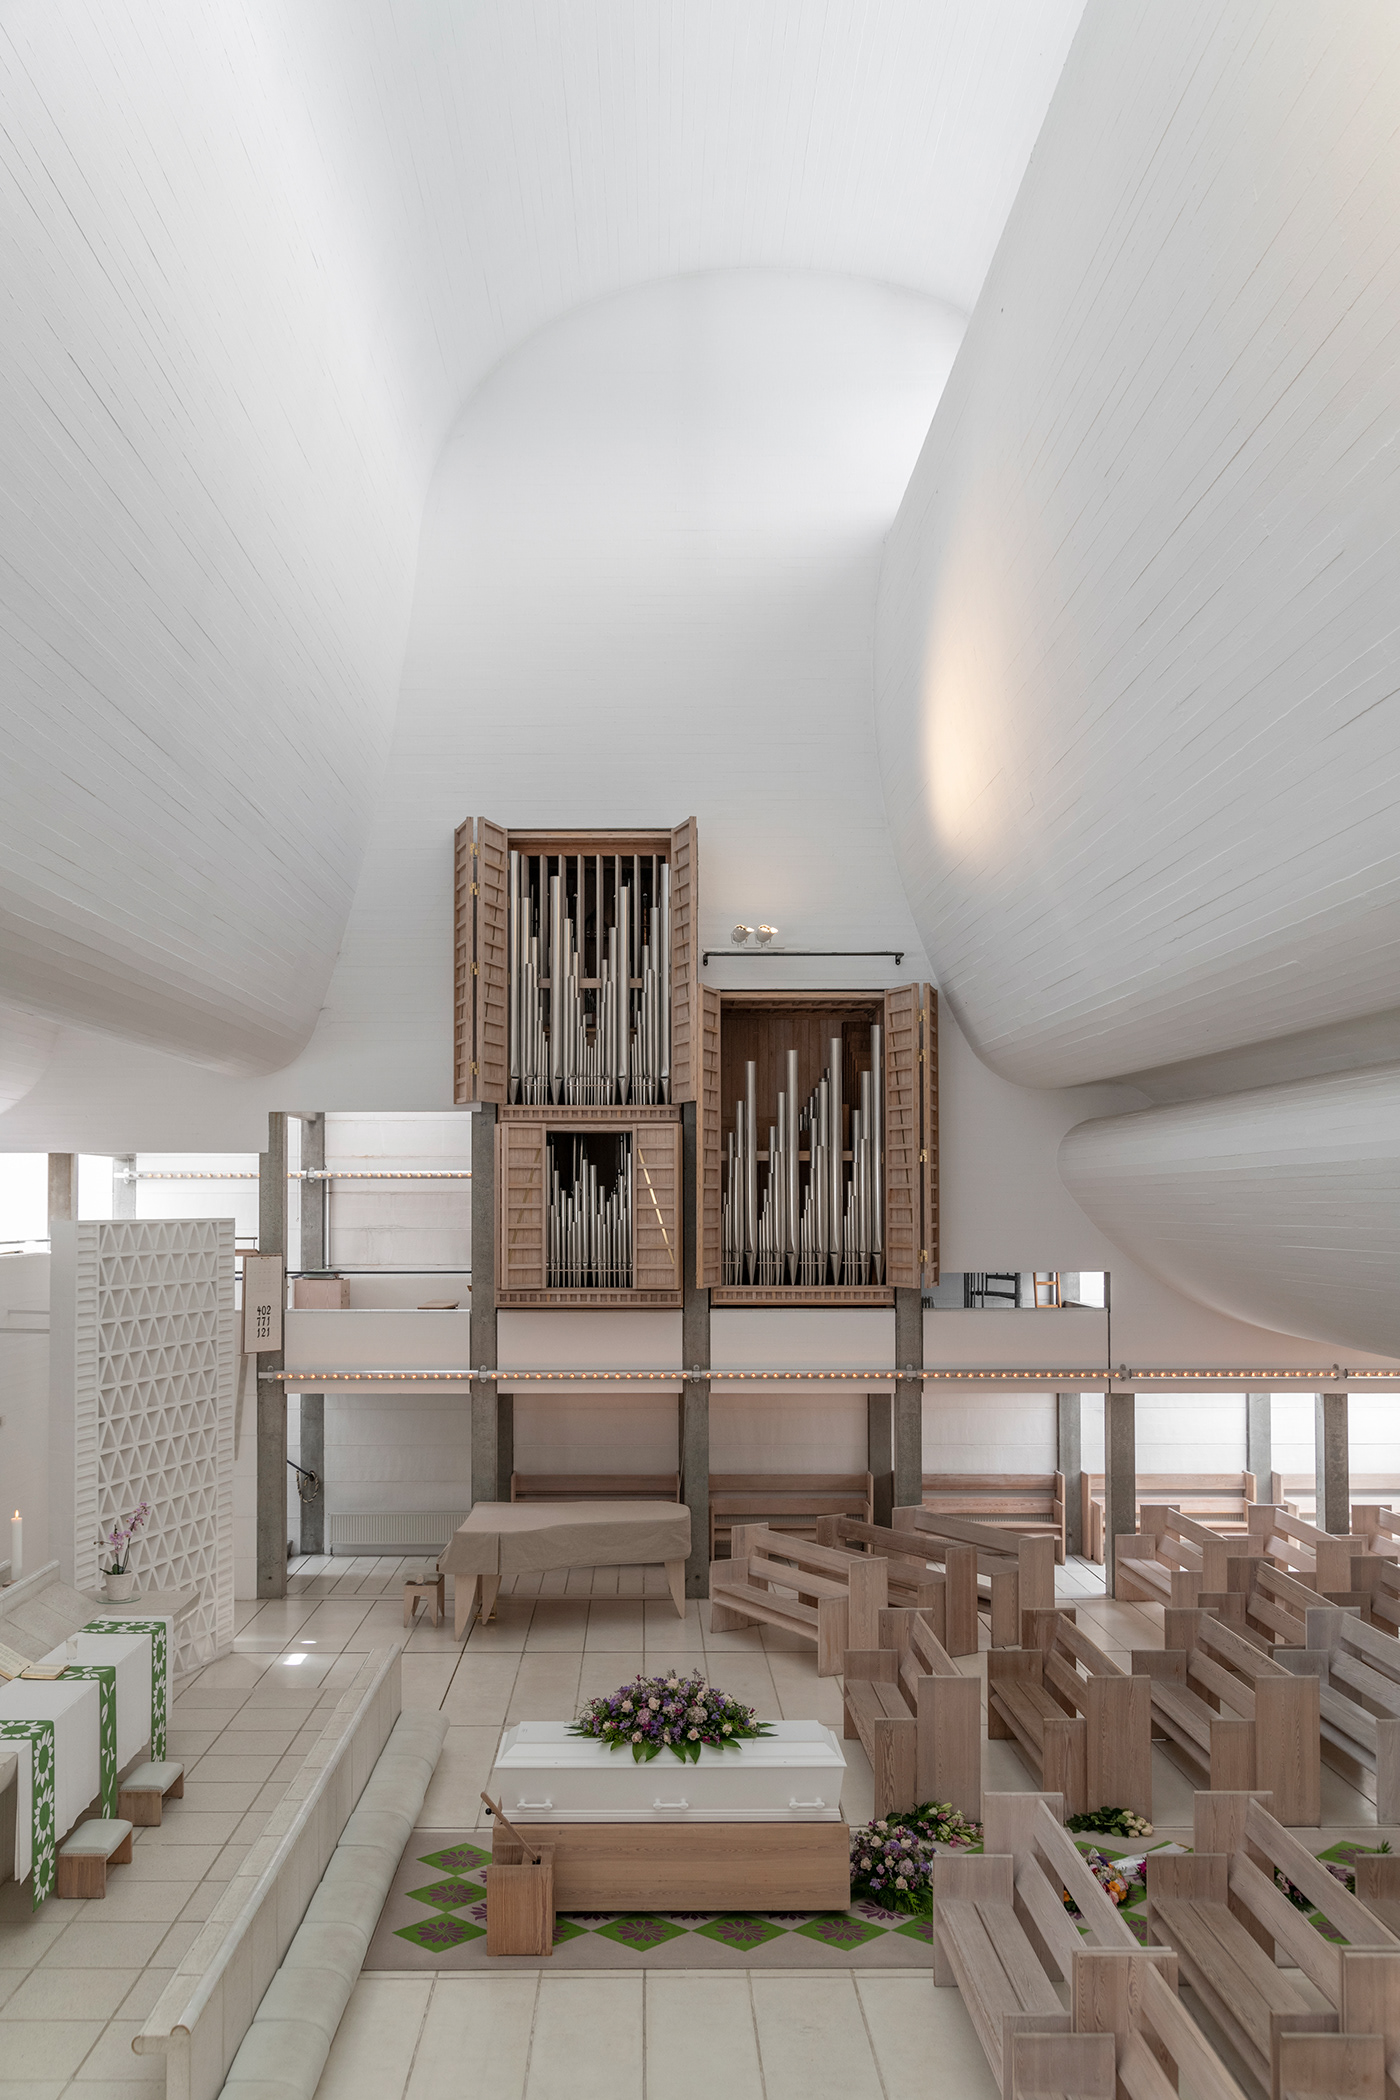 architectural architectural design architecture Architecture Photography church design utzon Utzon Bagsvaerd Church